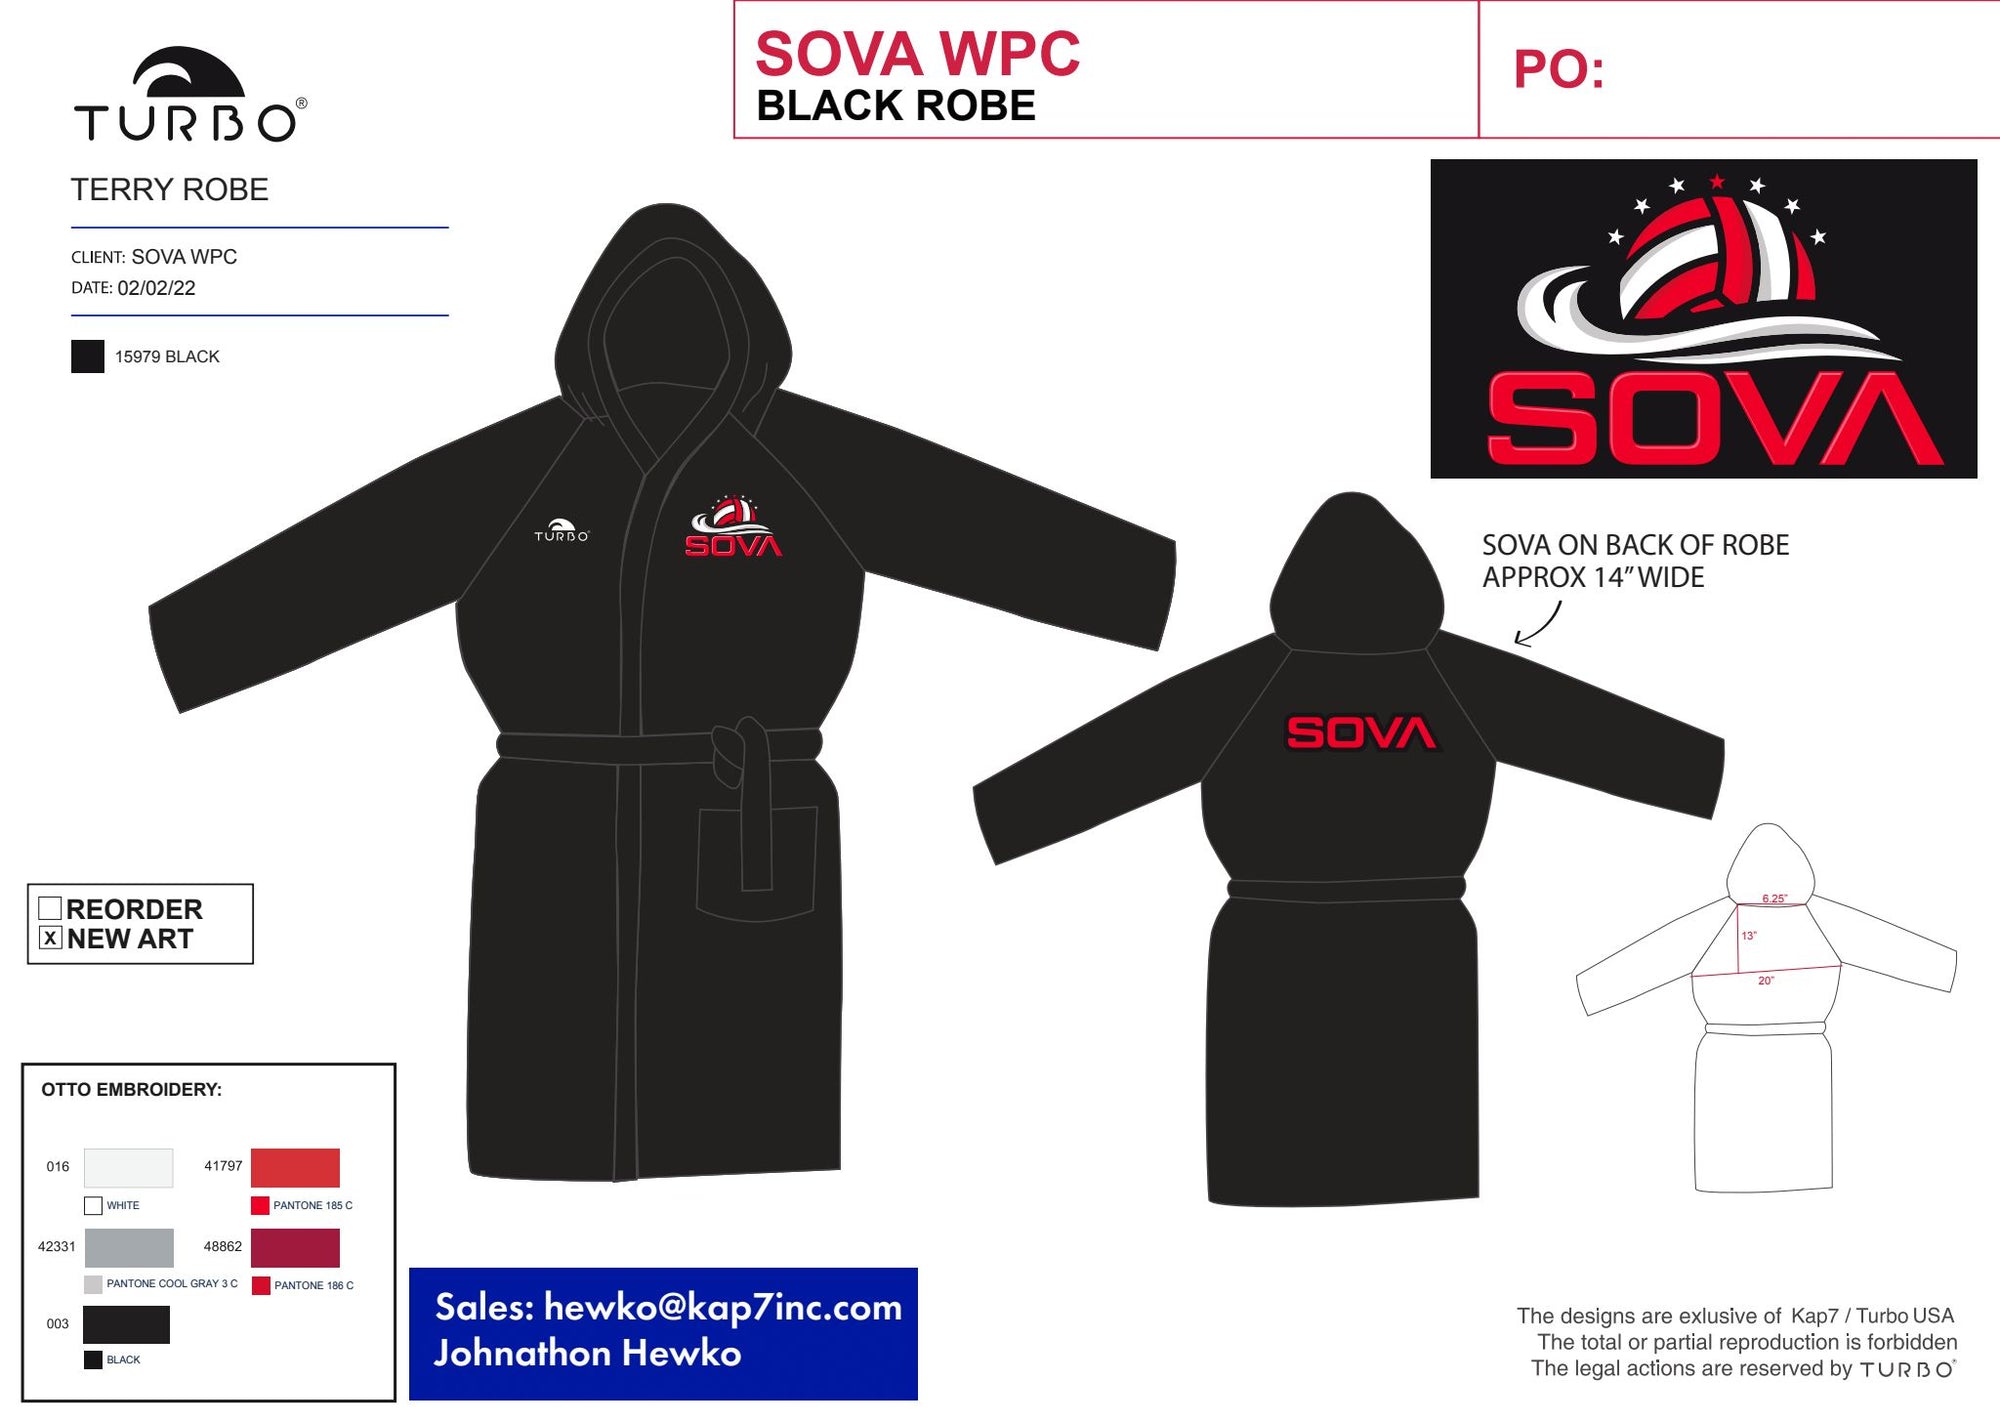 SOVA WPC- Team Store - Terry Robe